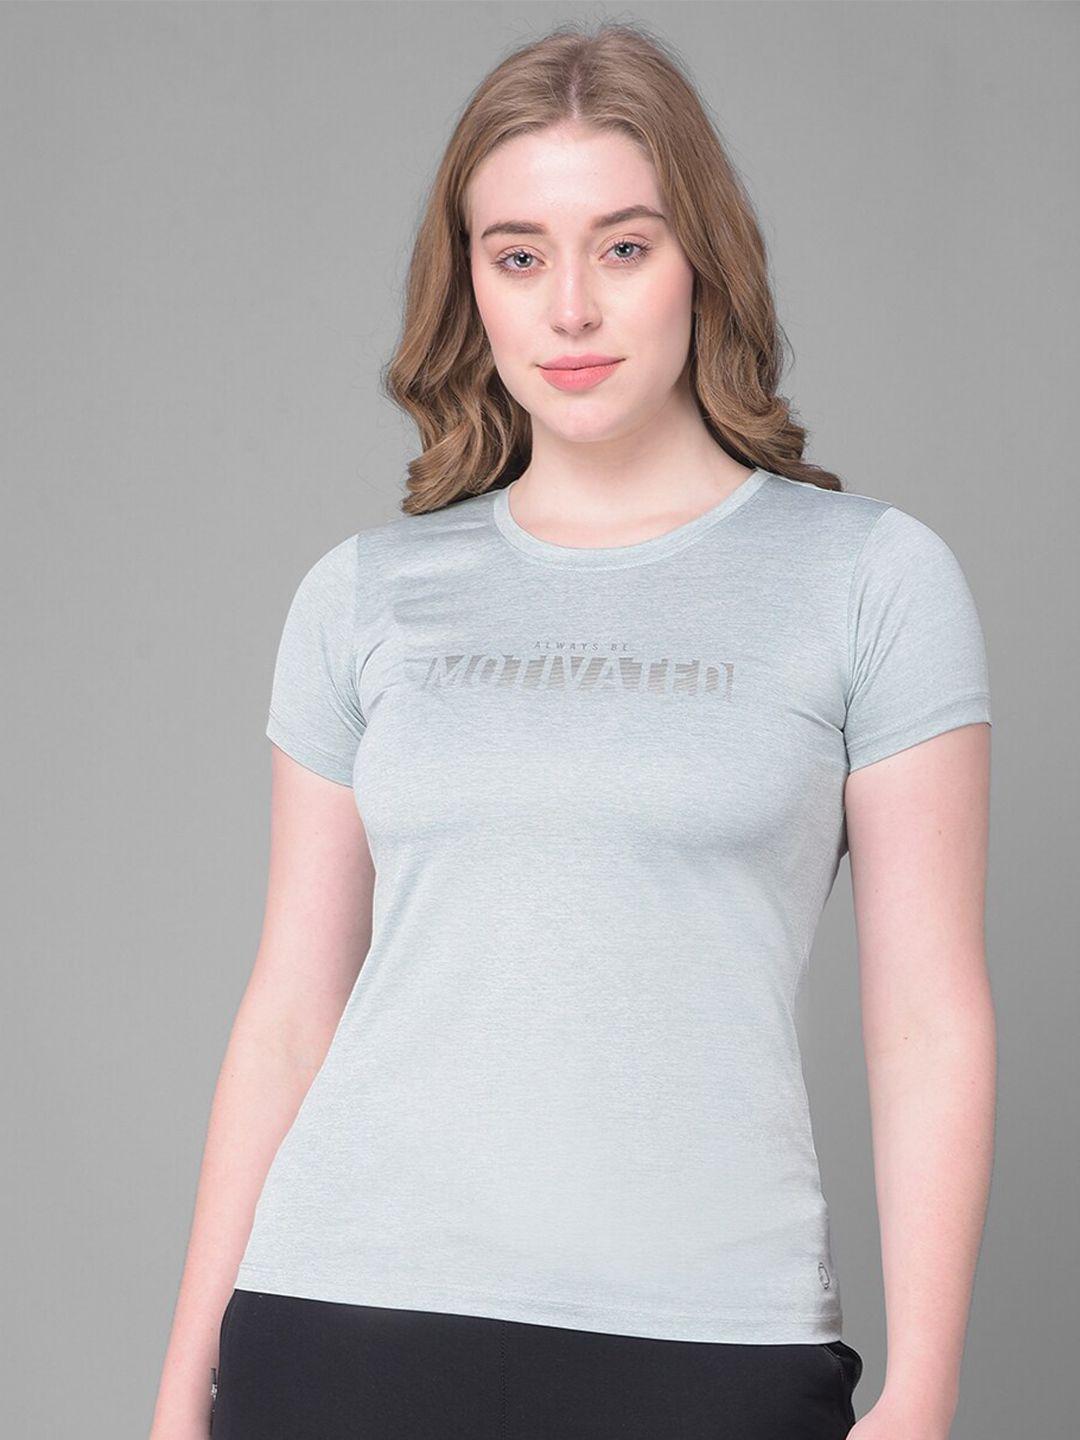 dollar-typography-printed-round-neck-sports-t-shirt